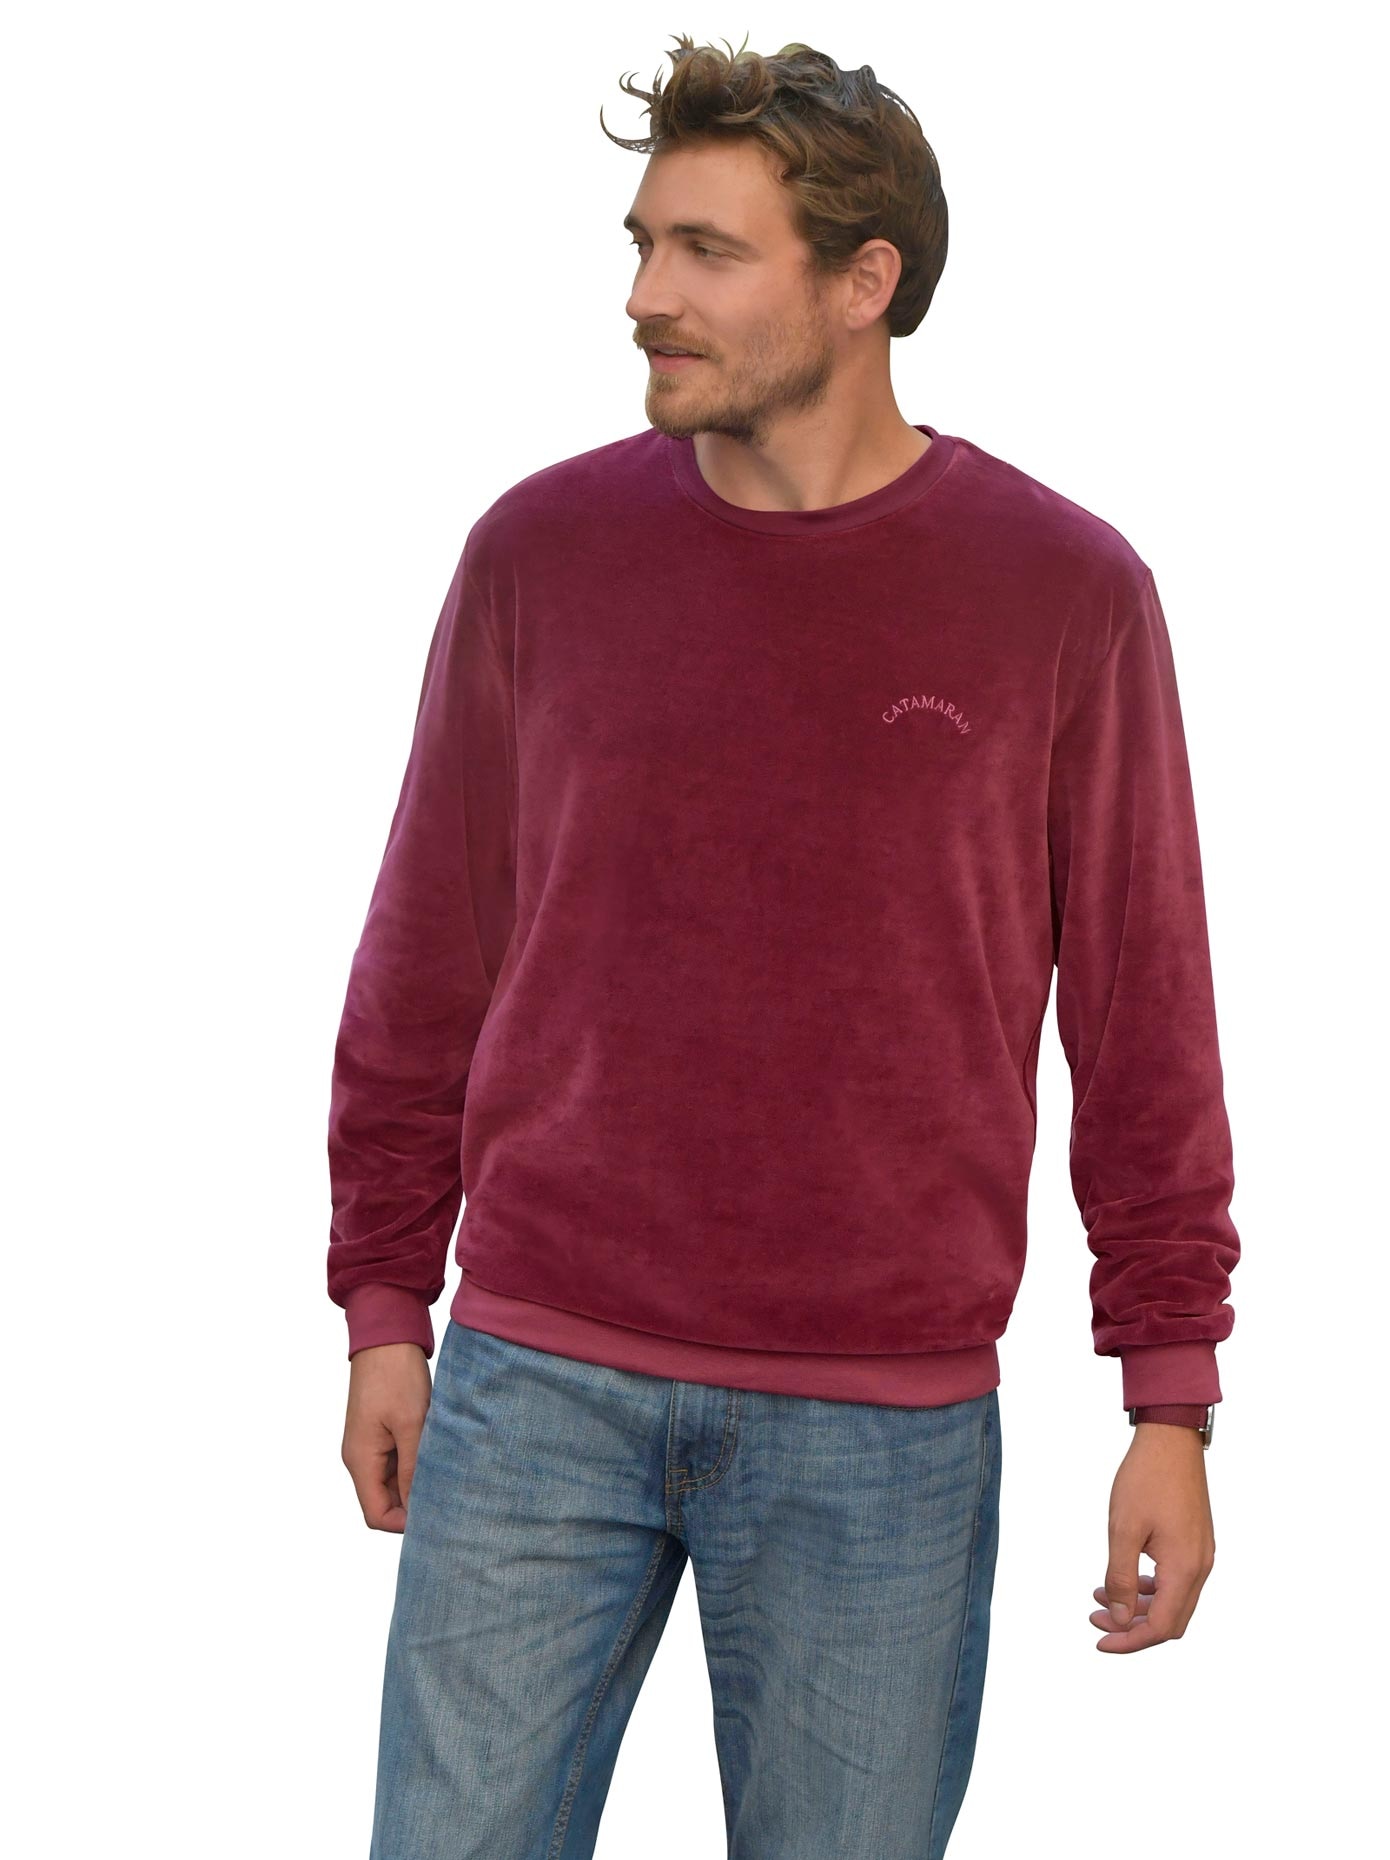 RAGMAN Sweatshirt online OTTO shoppen bei